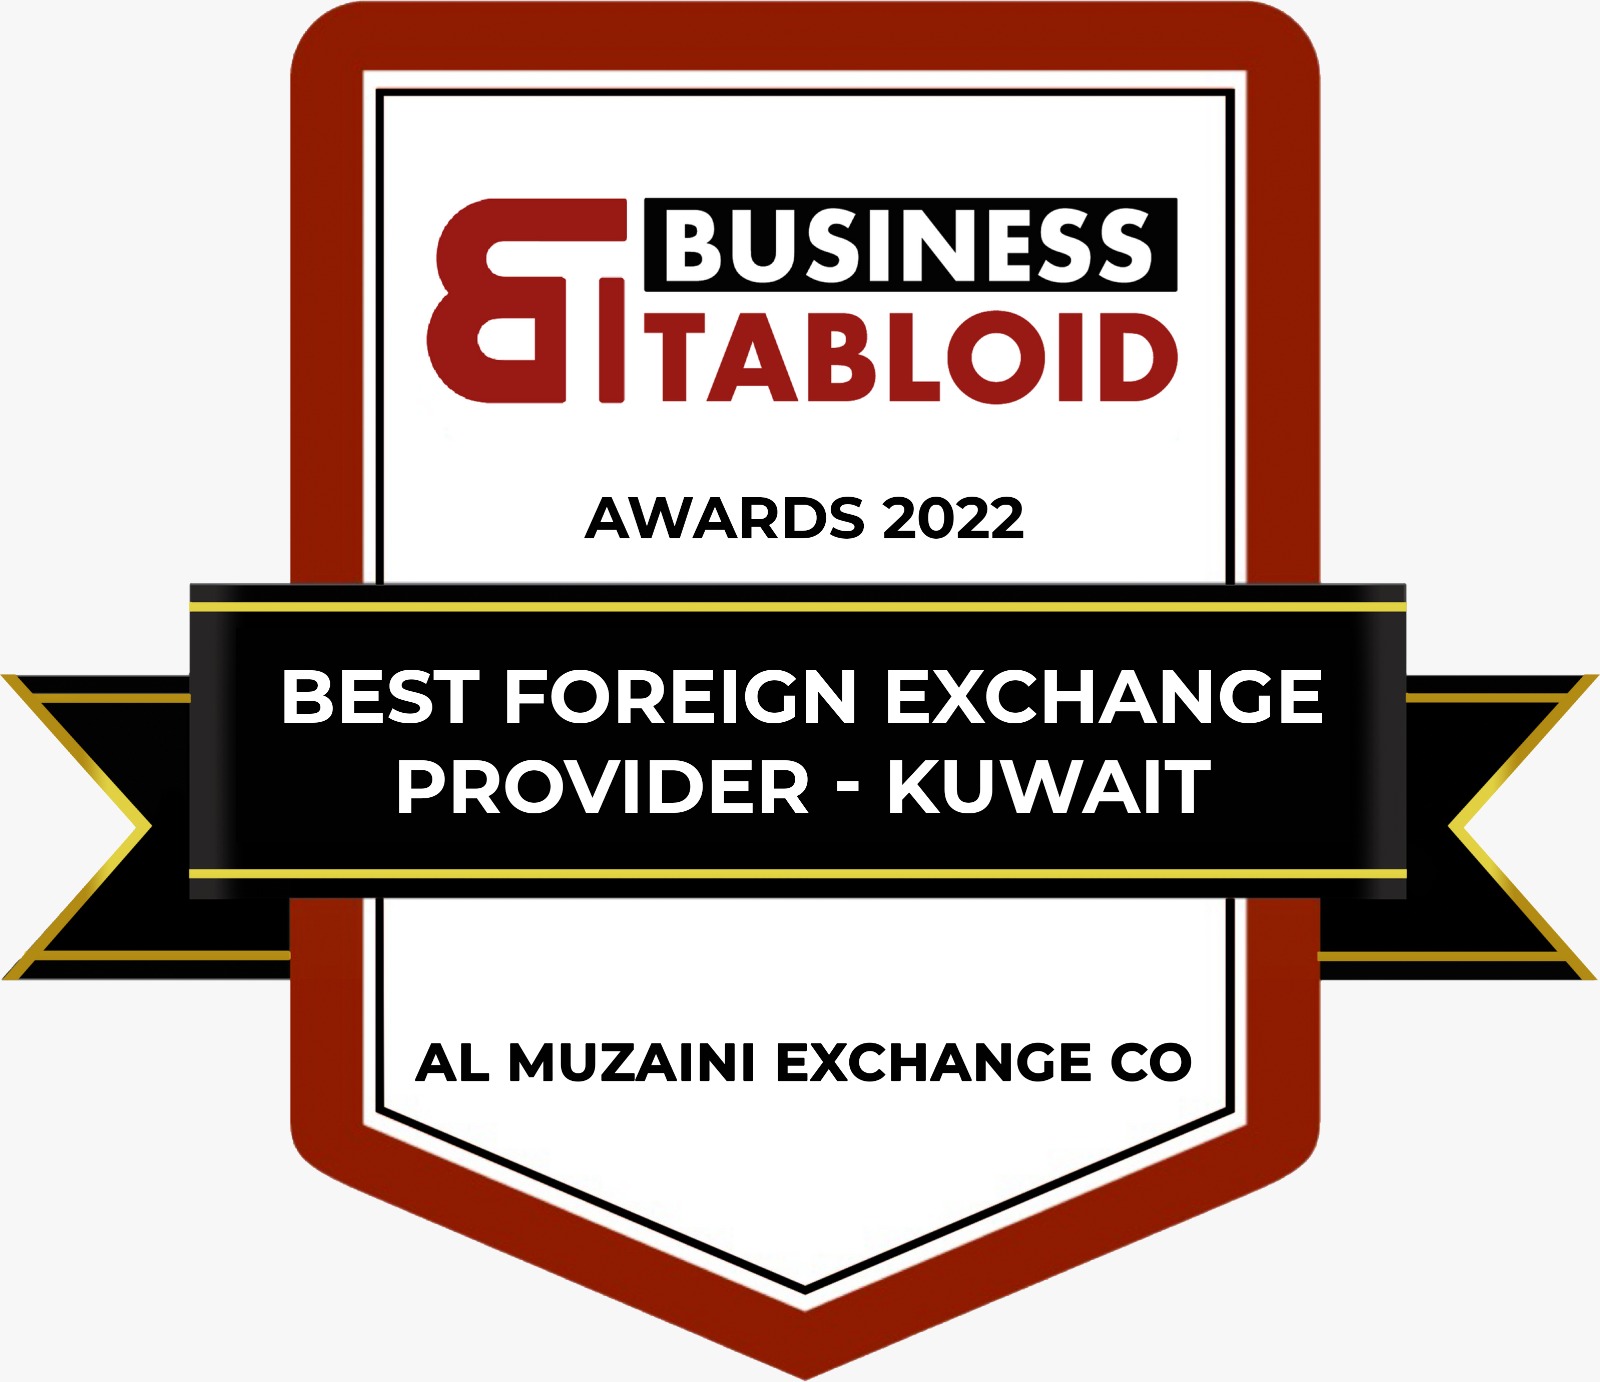 http://pakistanisinkuwait.com/images/5342-al-muzaini-exchange-company-honored.jpg